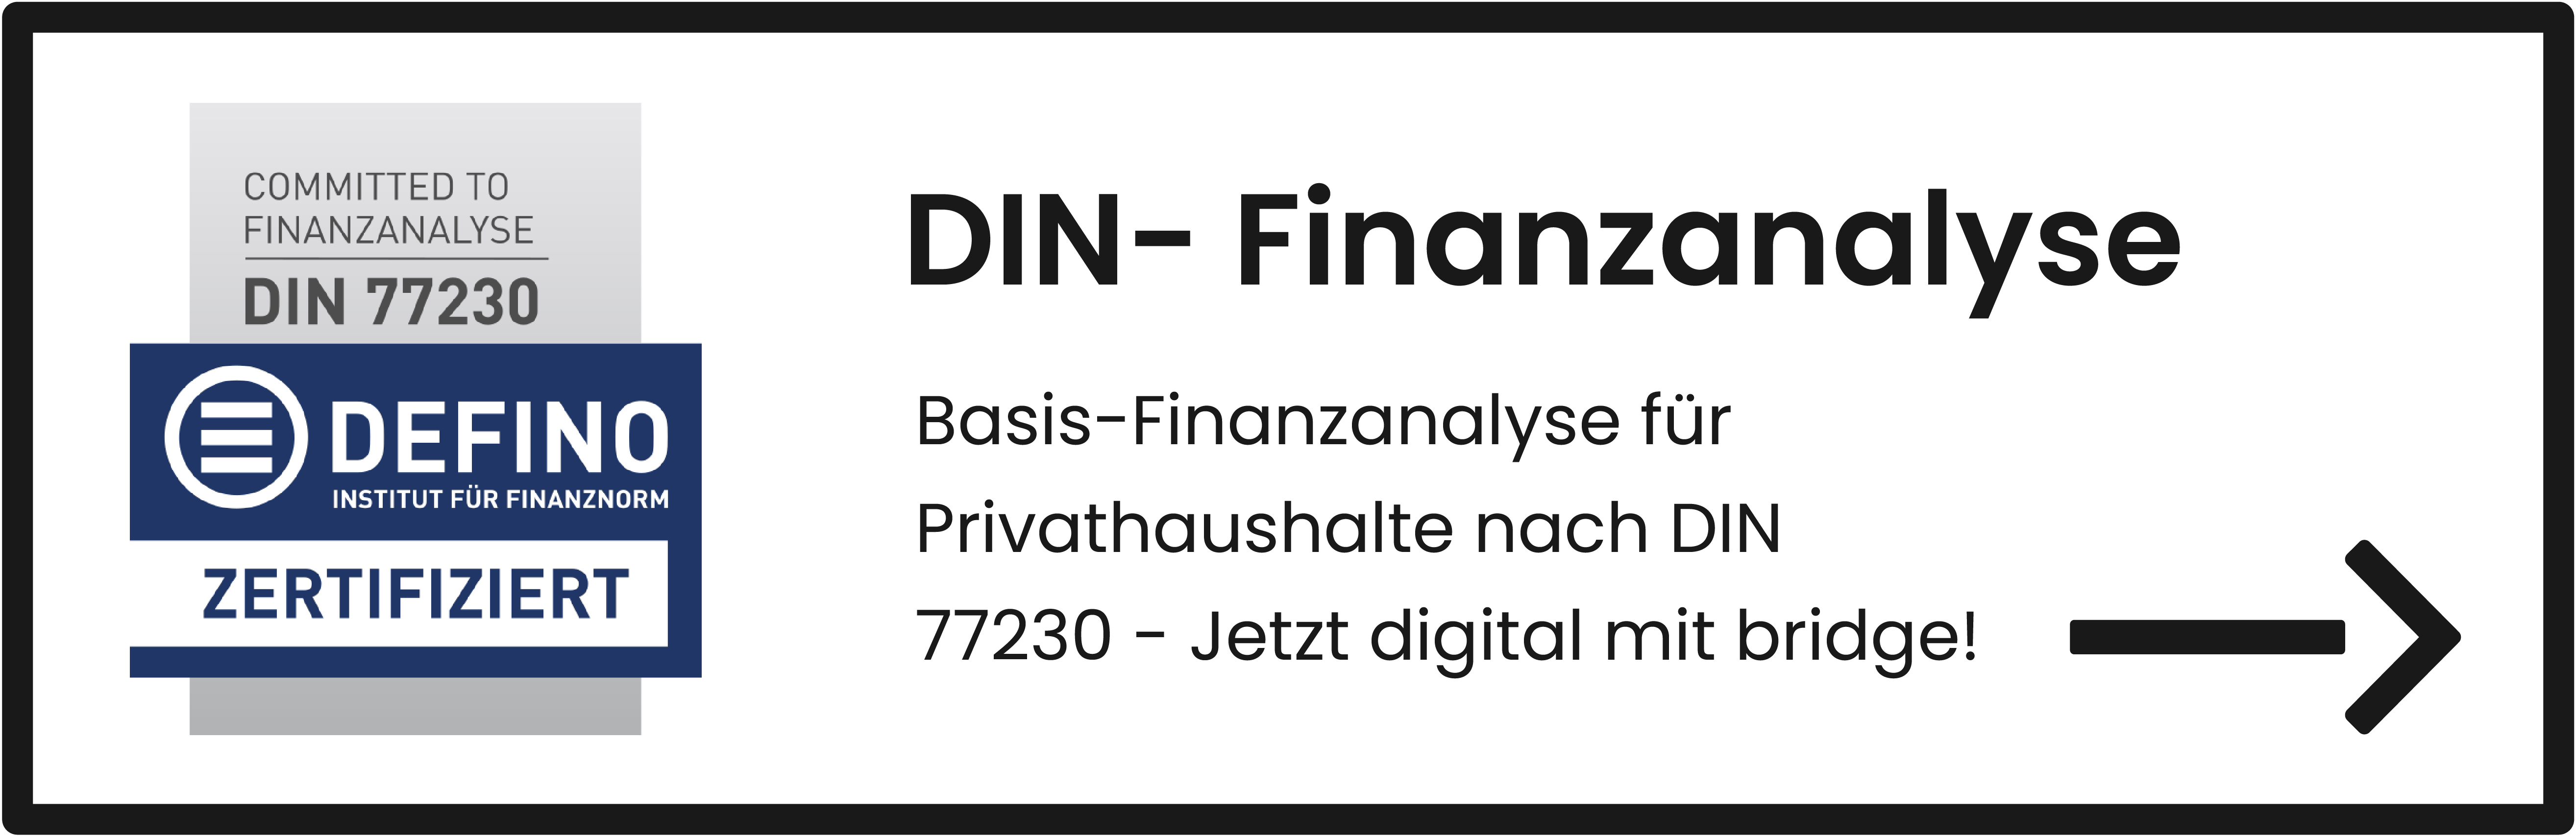 teaser-digitale-finanzanalyse-din-77230-bridge-online-beratung-software